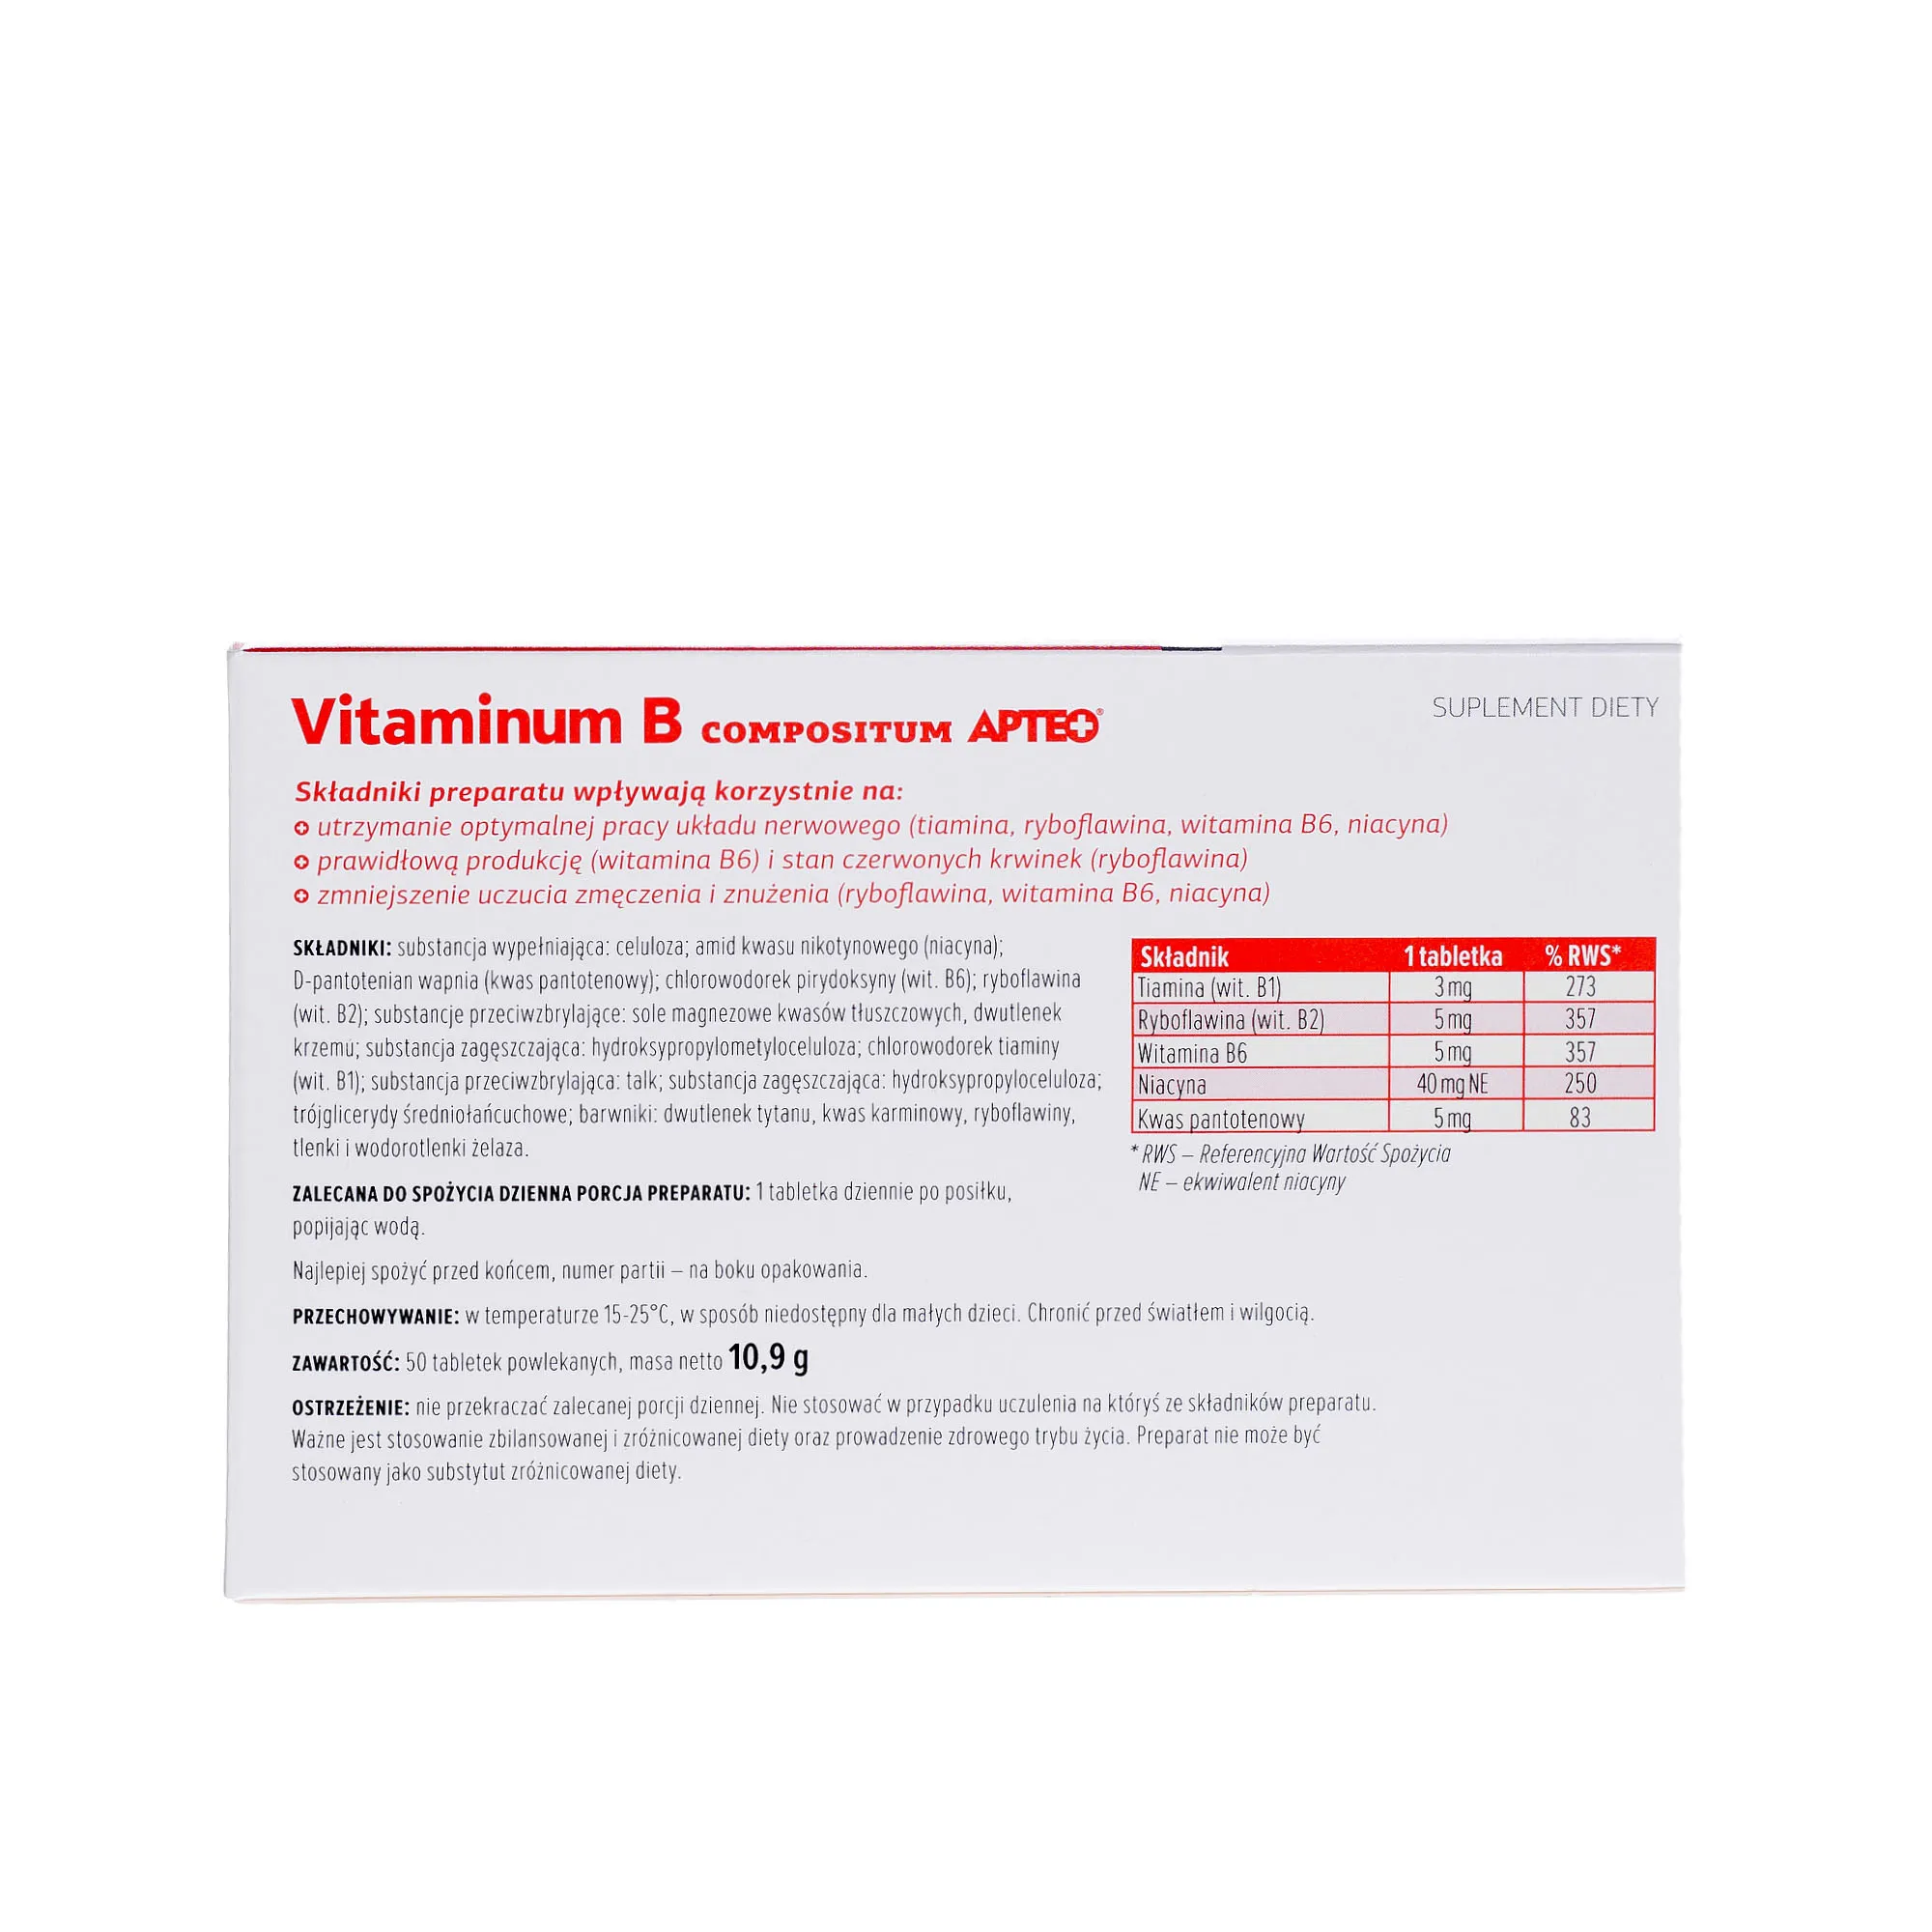 Vitaminum B Compositum, suplement diety, 50 tabletek powlekanych 